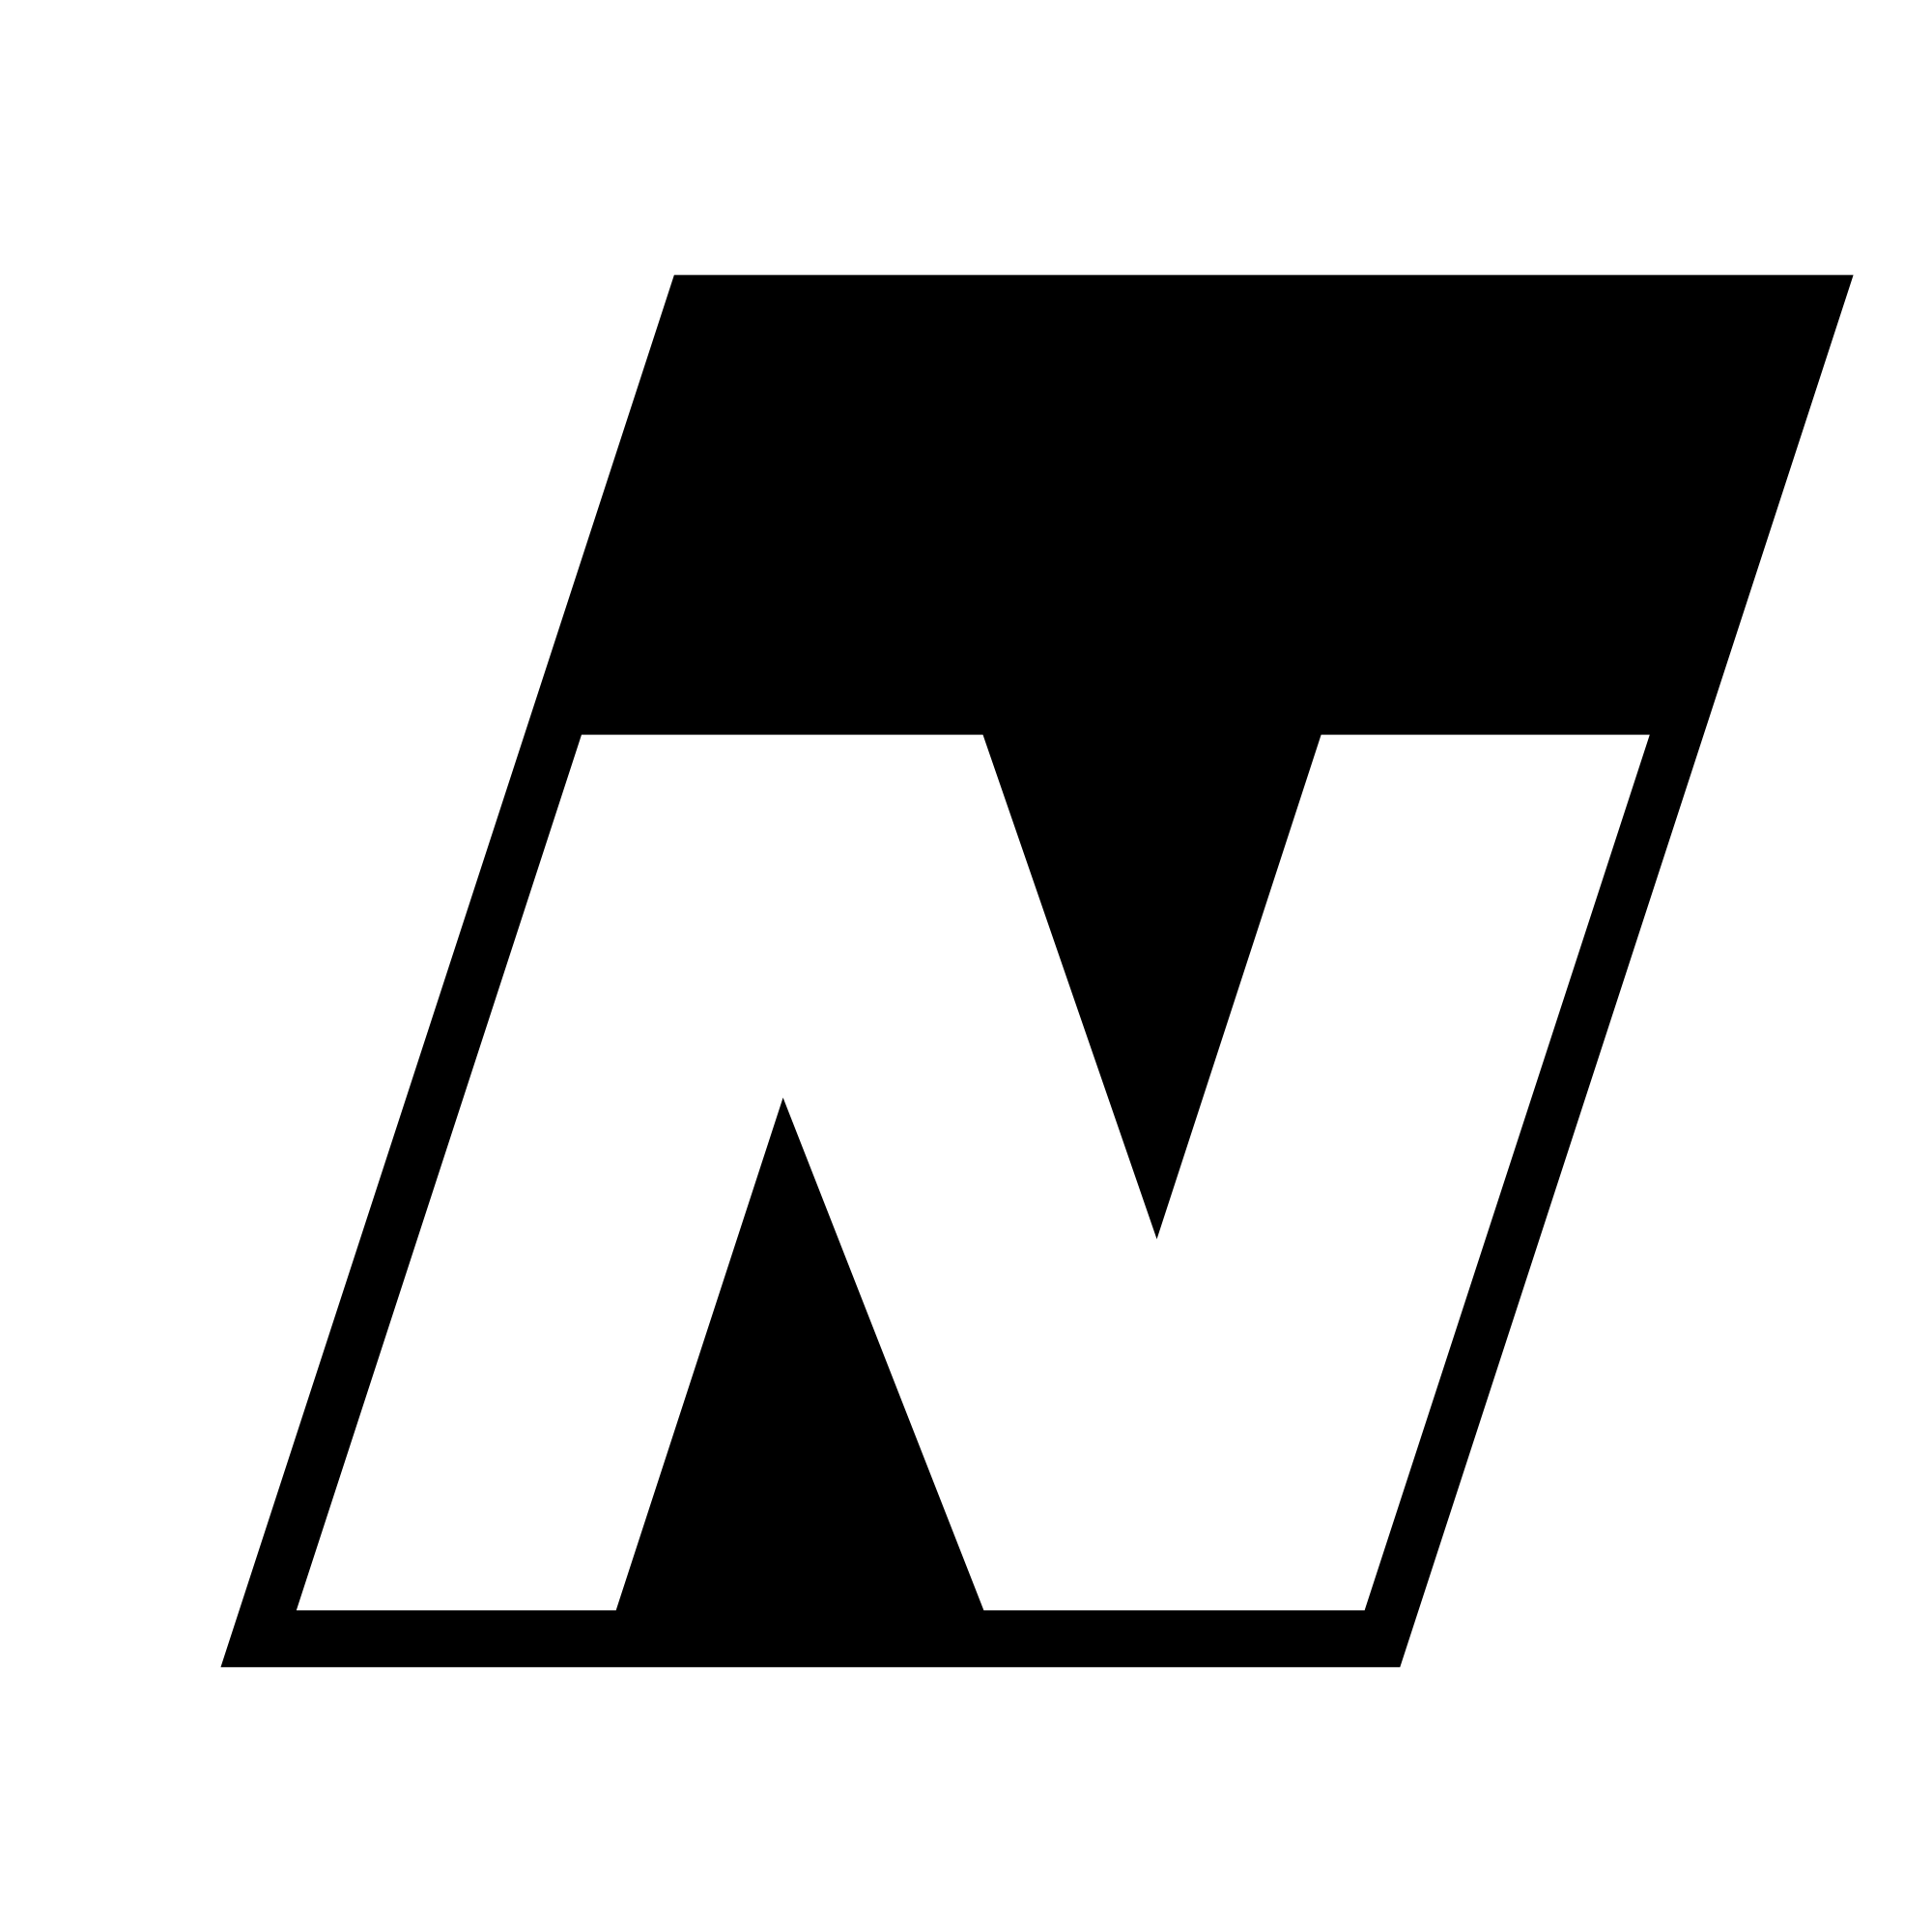 NIOSH Logo - File:NIOSH logo N.svg - Wikimedia Commons